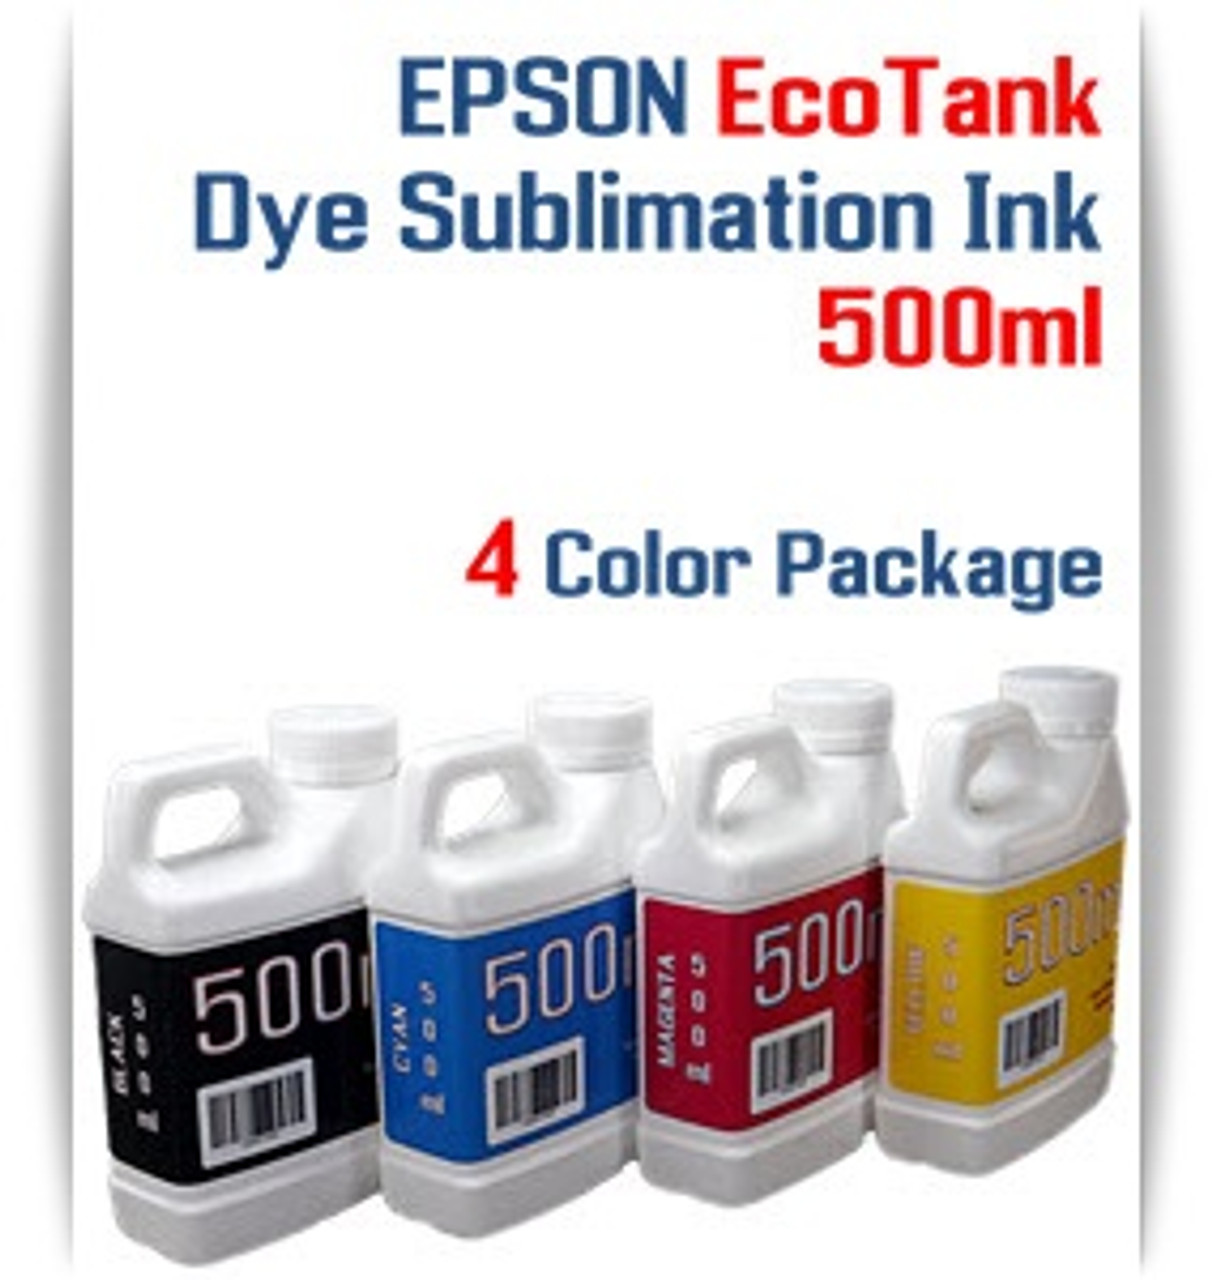 EPSON EcoTank printer Dye Sublimation Ink - 4 Color 500ml bottles

EPSON Expression ET-2500 EcoTank Printer

EPSON Expression ET-2550 EcoTank Printer

EPSON Expression ET-2600 EcoTank Printer

EPSON Expression ET-2650 EcoTank Printer

EPSON Expression ET-2700 EcoTank Printer

EPSON Expression ET-2750 EcoTank Printer

EPSON Expression ET-3600 EcoTank Printer

EPSON Expression ET-3700 EcoTank Printer

EPSON WorkForce ET-3750 EcoTank Printer

EPSON WorkForce ET-4500 EcoTank Printer

EPSON WorkForce ET-4550 EcoTank Printer

EPSON WorkForce ET-4750 EcoTank Printer

EPSON WorkForce ET-16500 EcoTank Printer